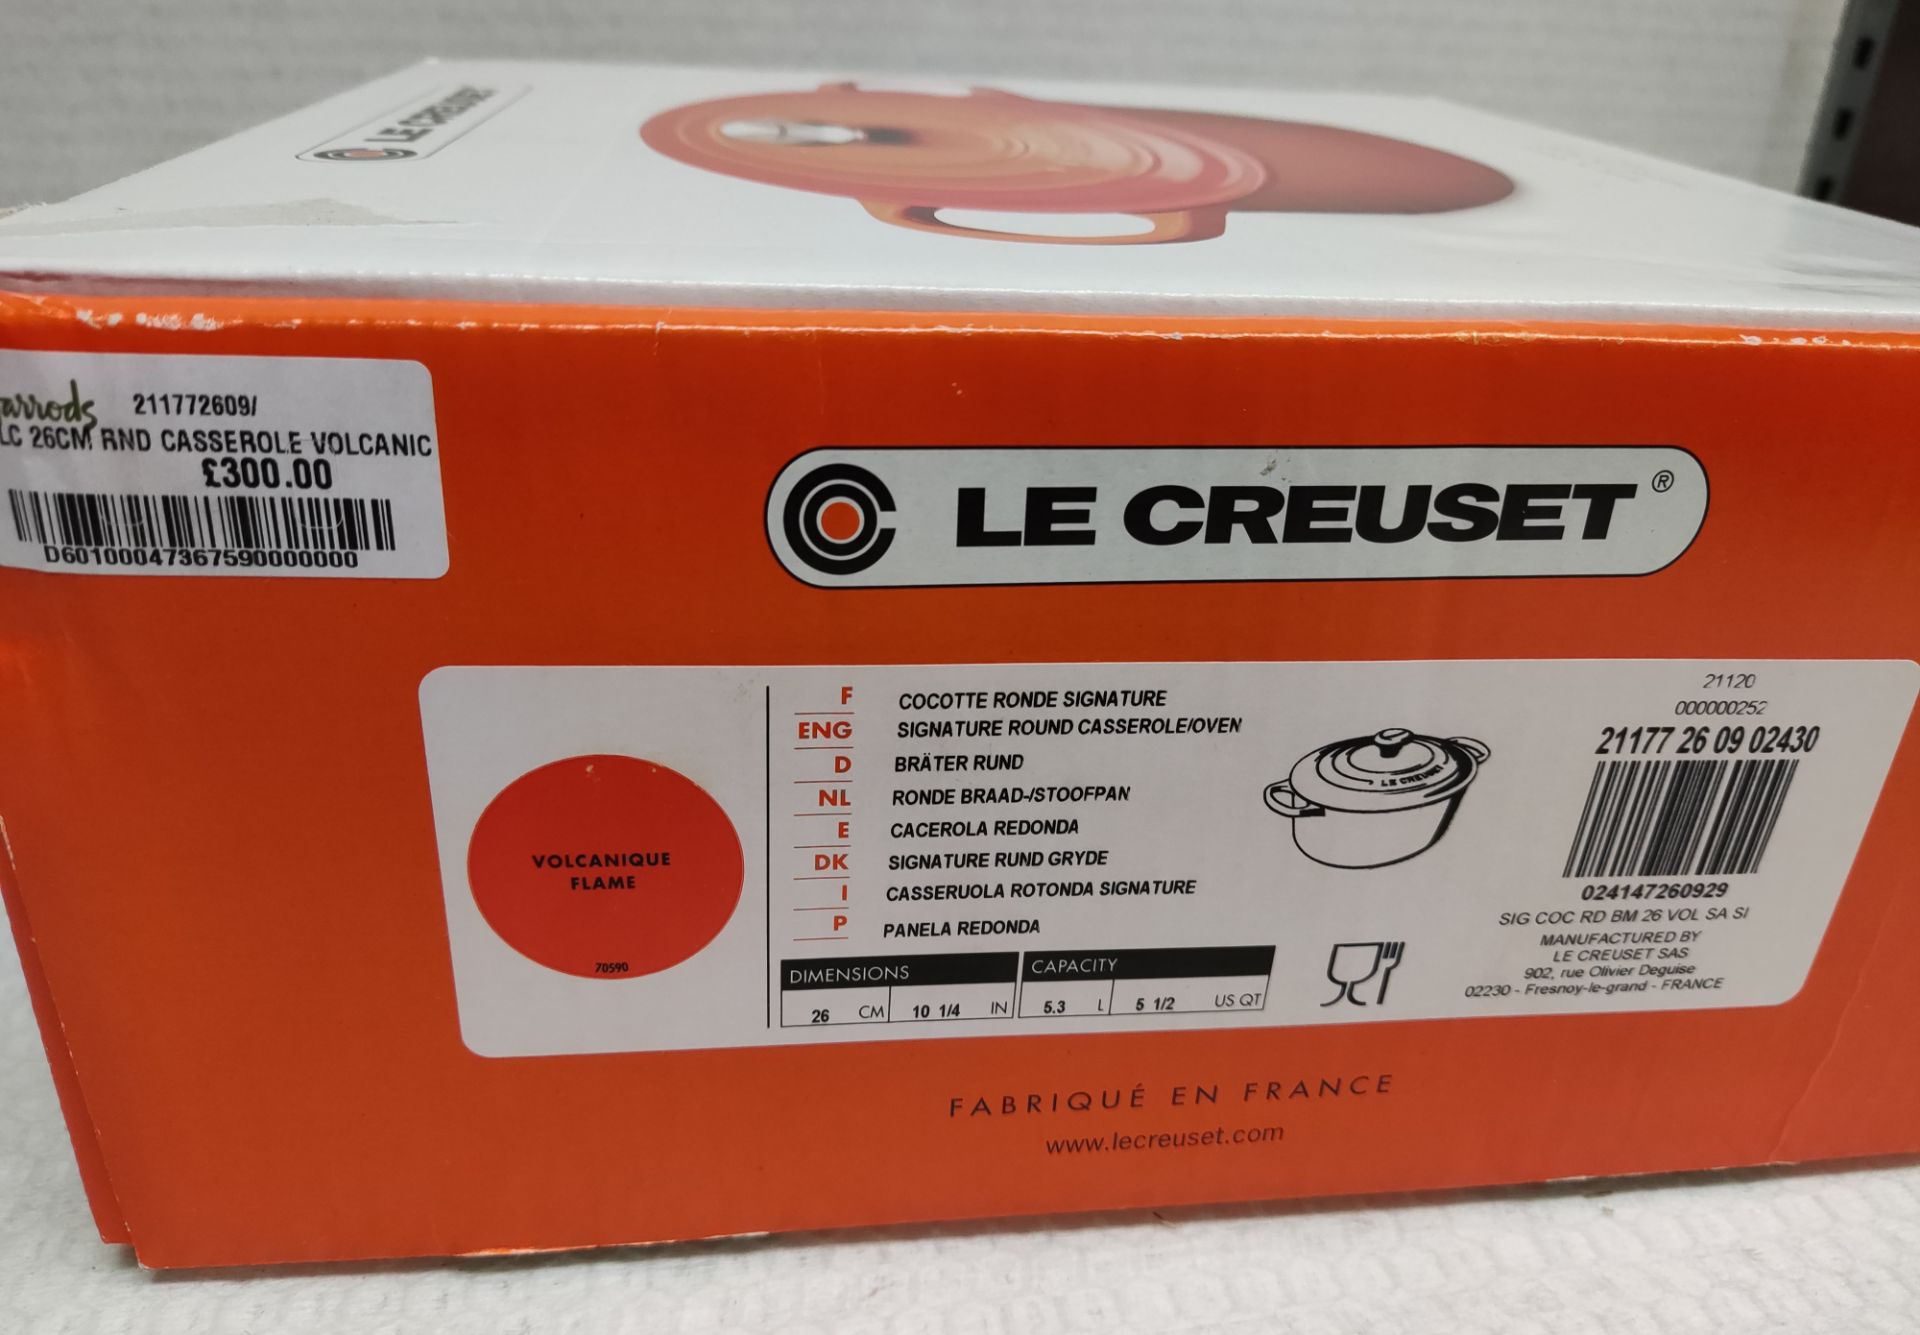 1 x LE CREUSET Signature Cast Iron 26Cm Round Casserole - Volcanic - Boxed - Original RRP £250 - - Image 12 of 12